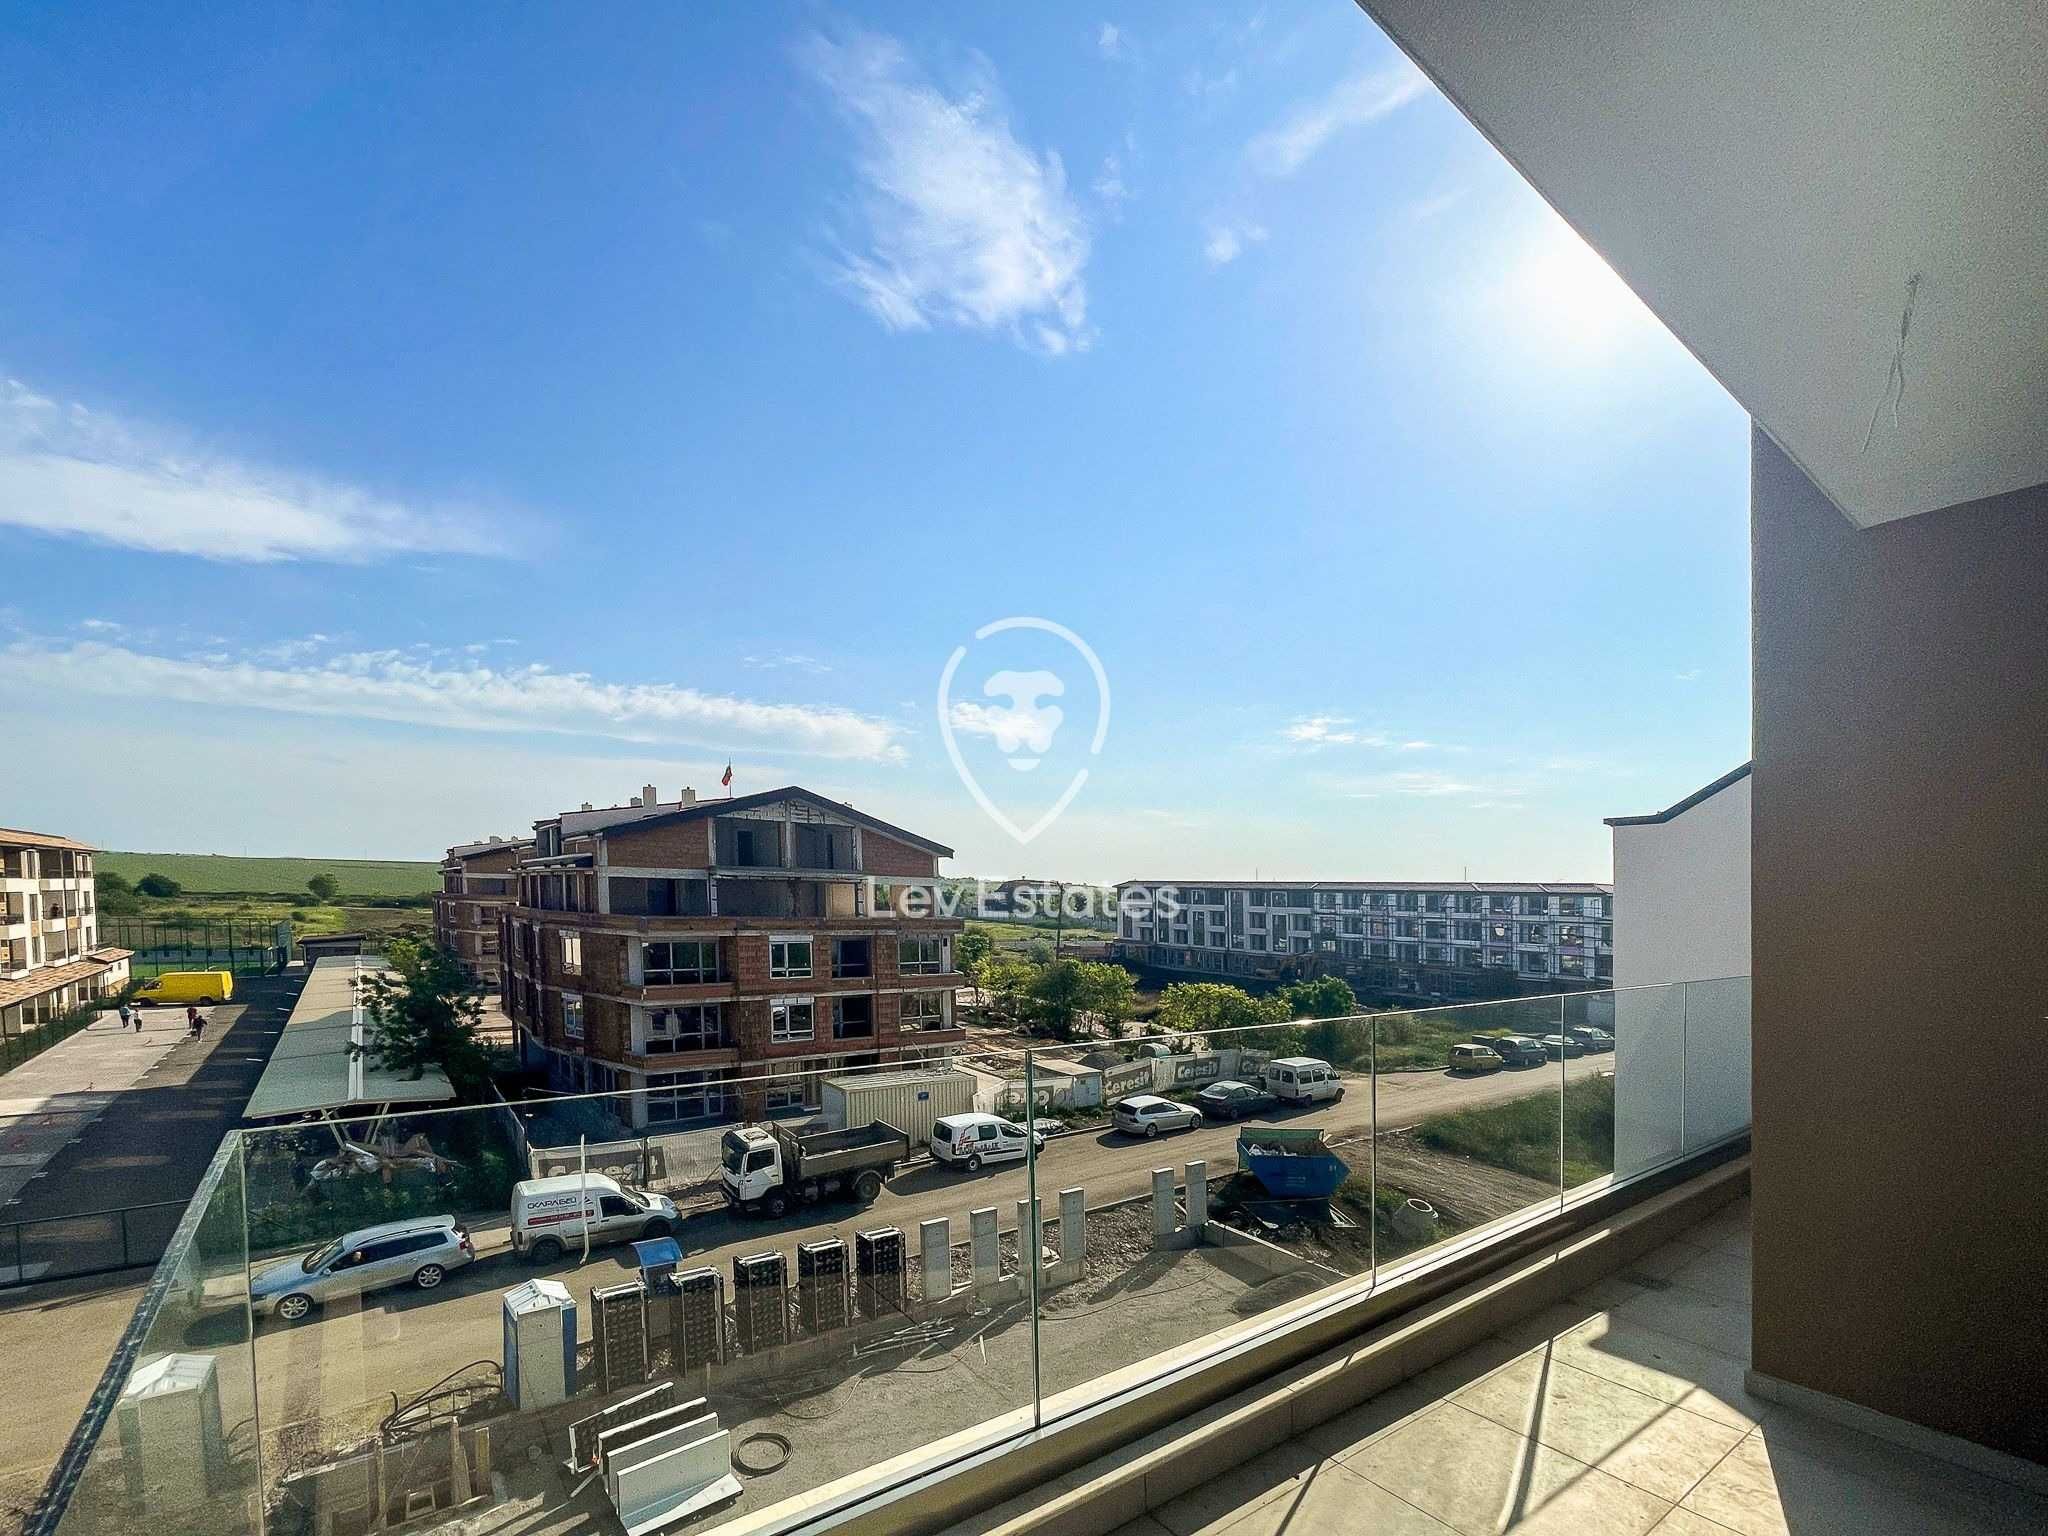 Тристаен апартамент в нова сграда с морска панорама в Сарафово, Бургас